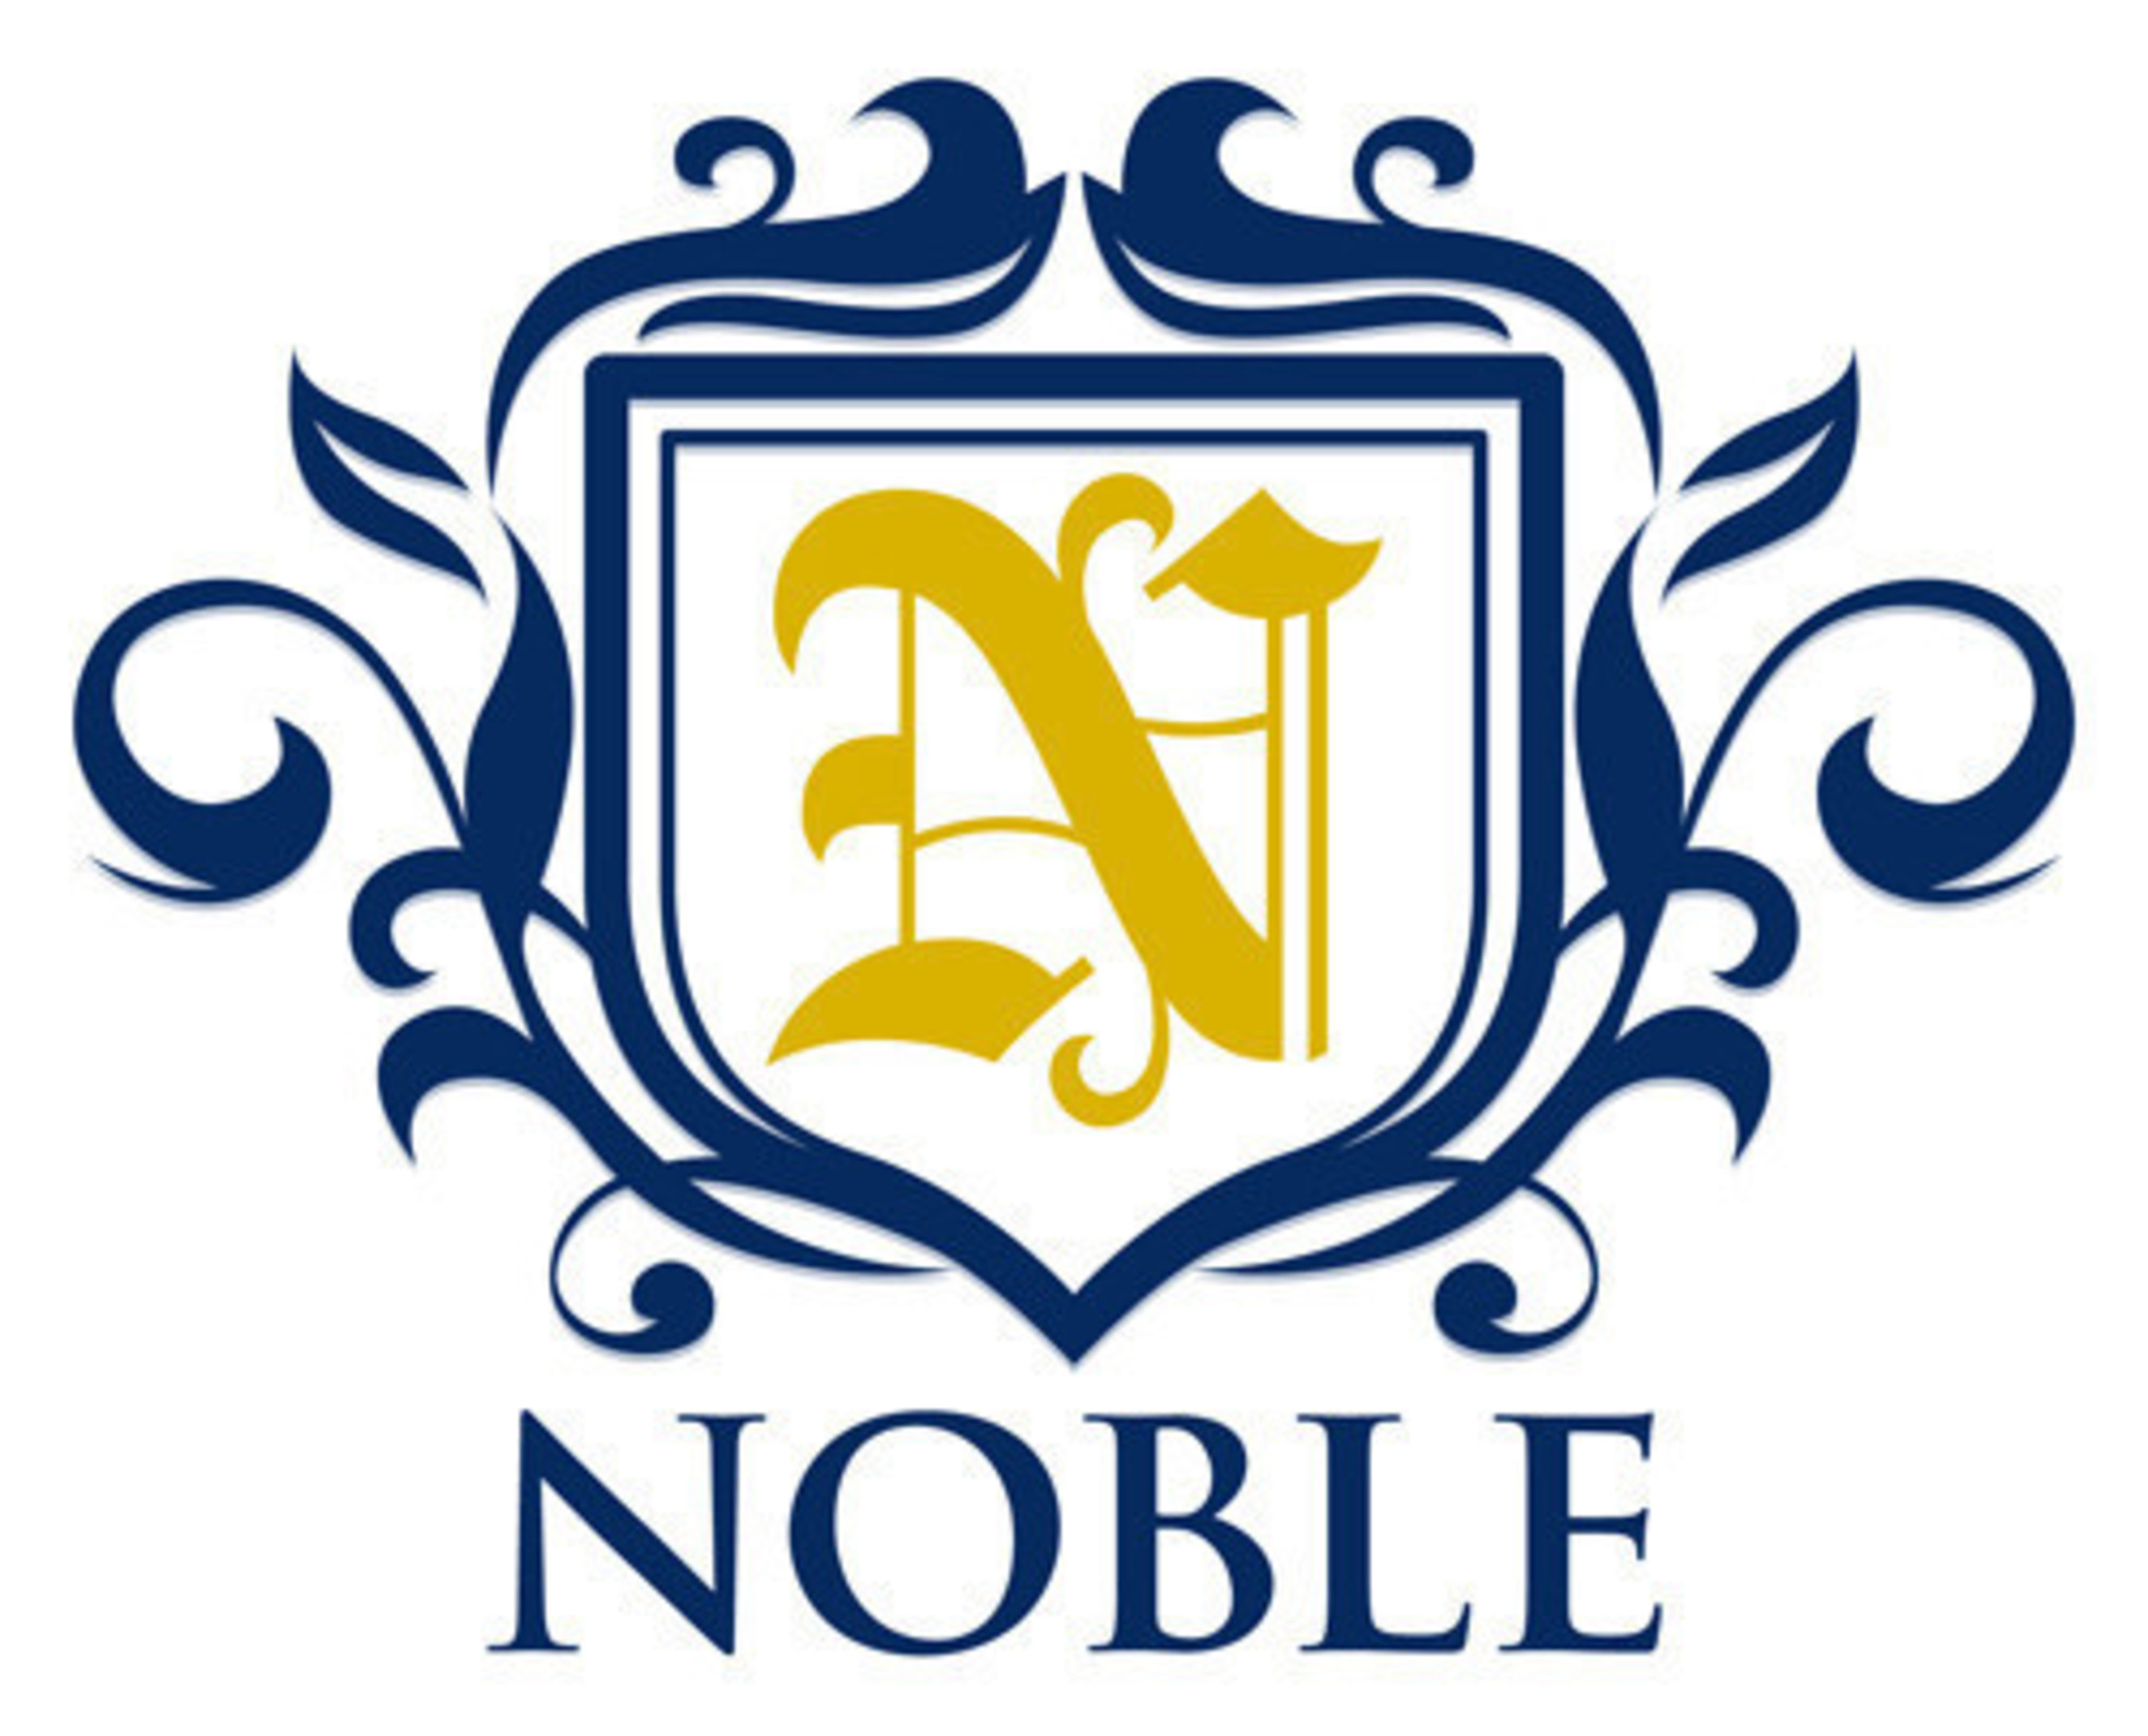 Noble Capital